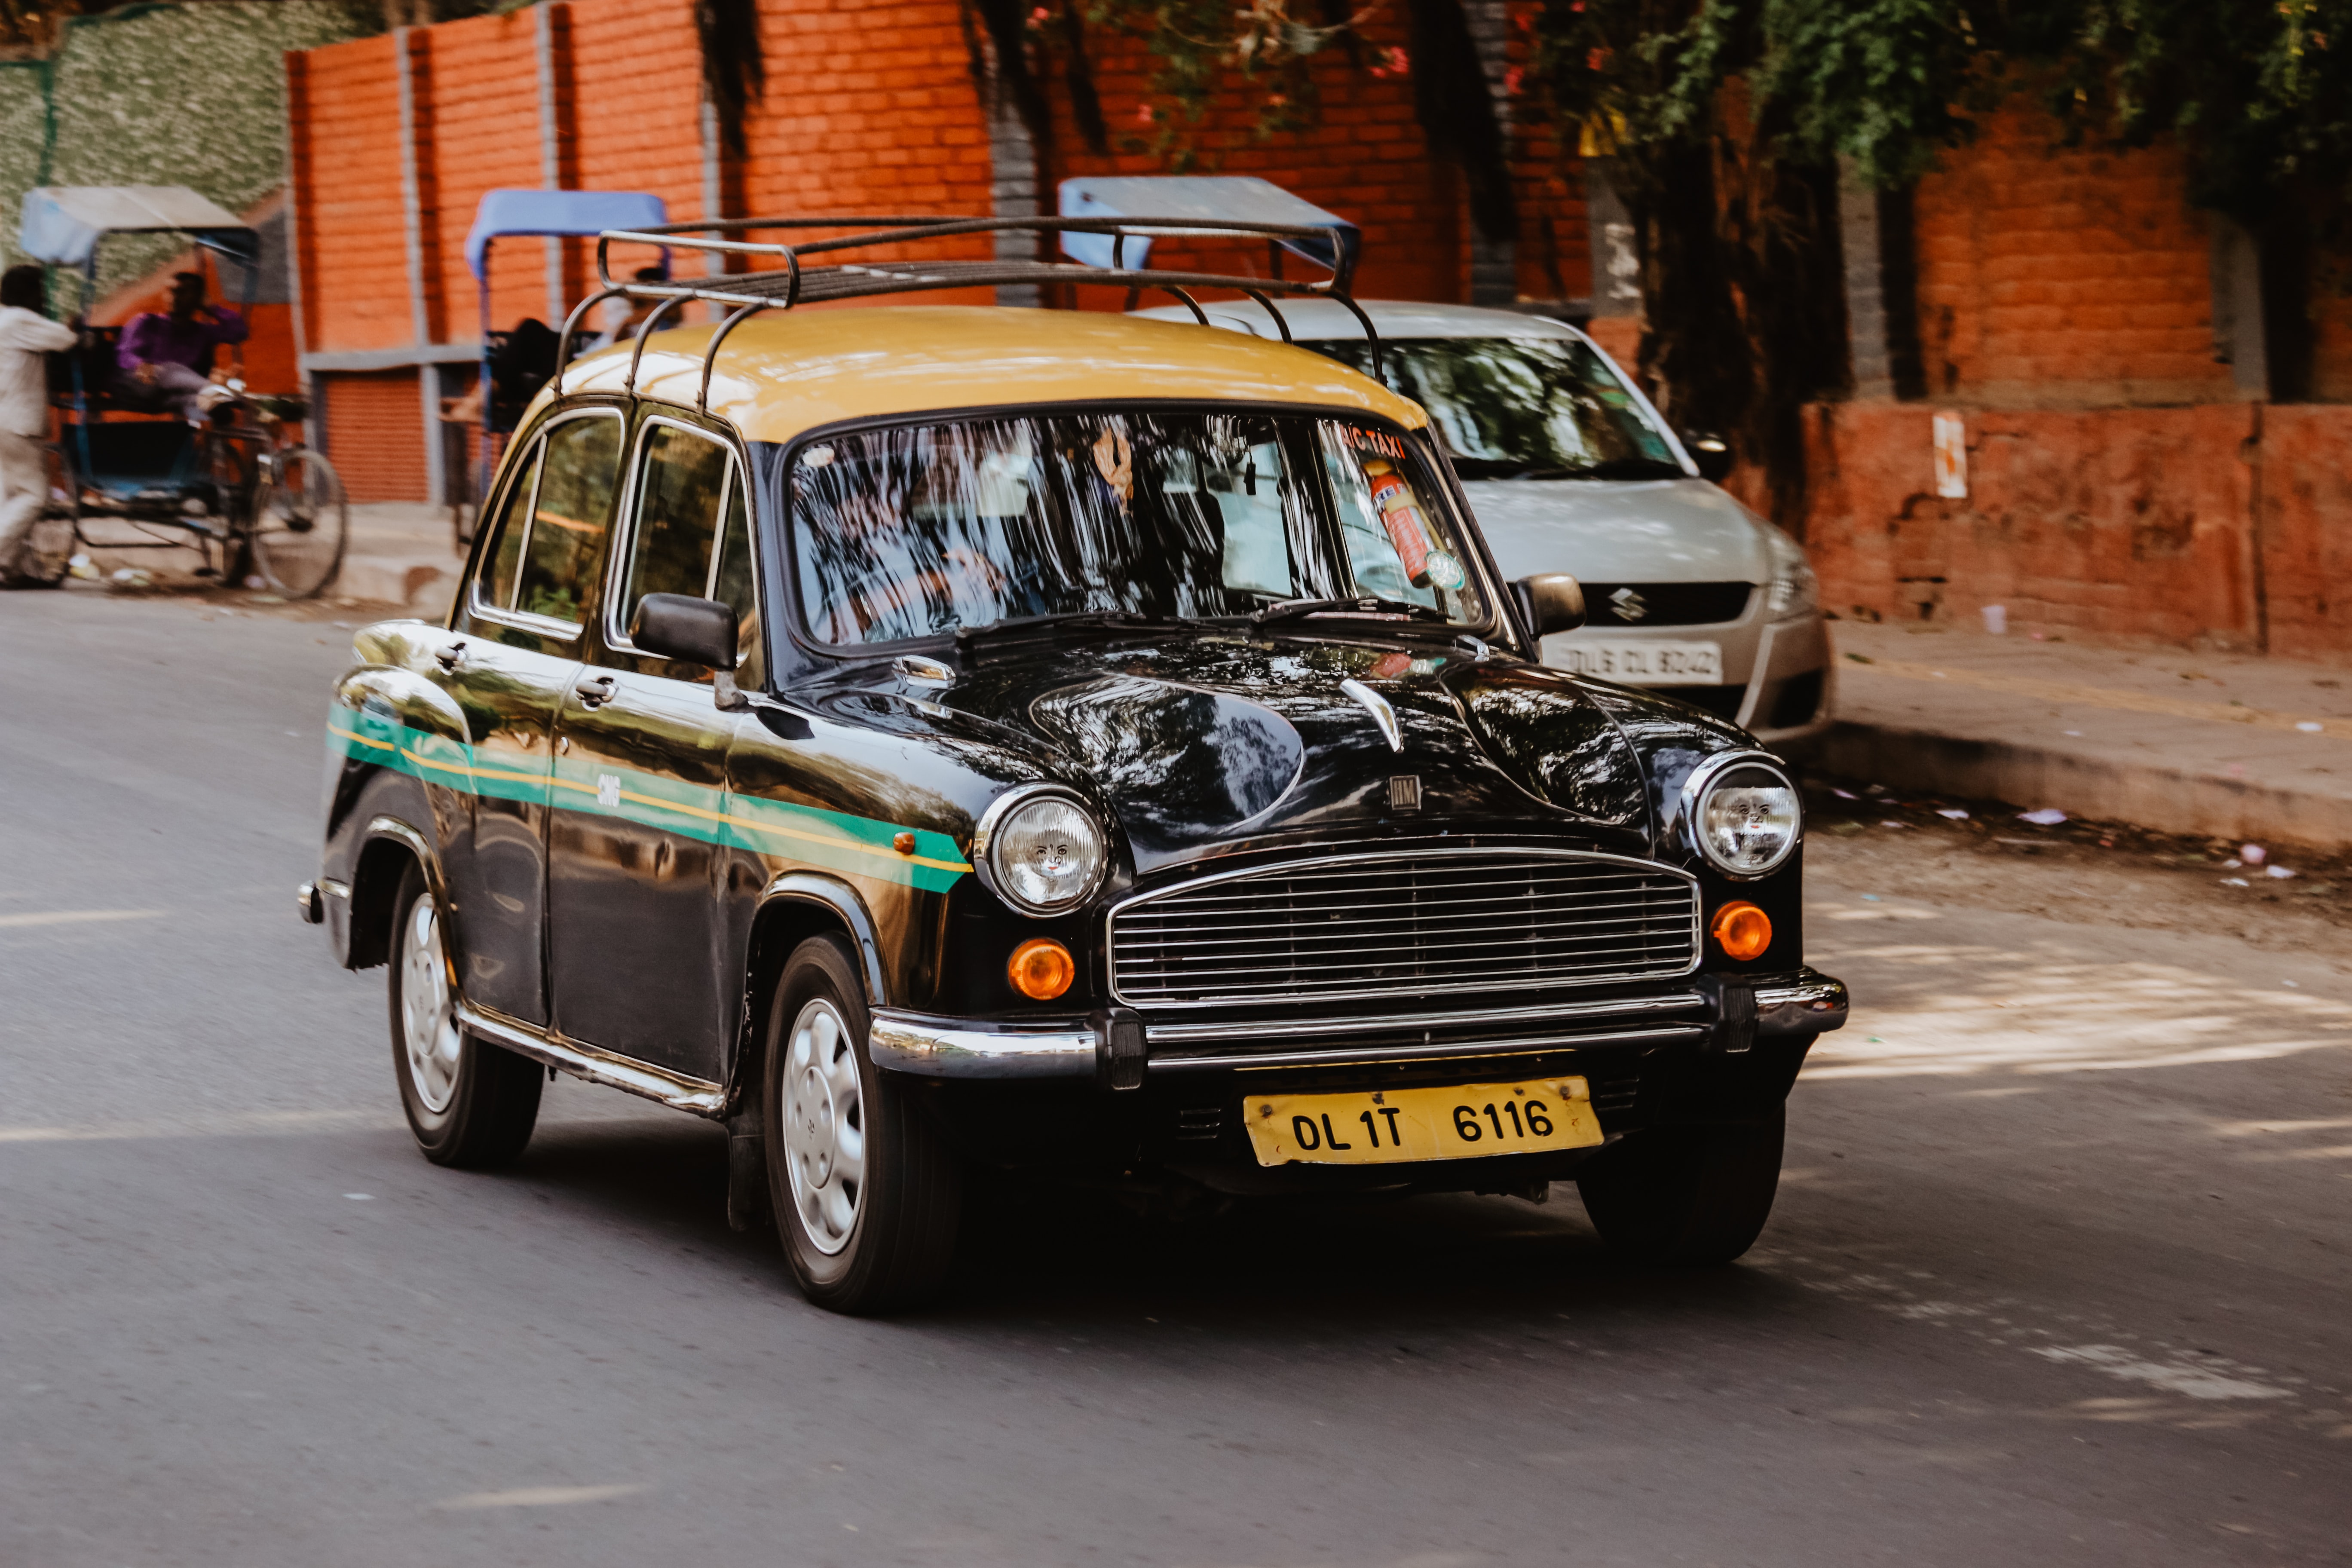 Old fashioned cabs in Delhi 